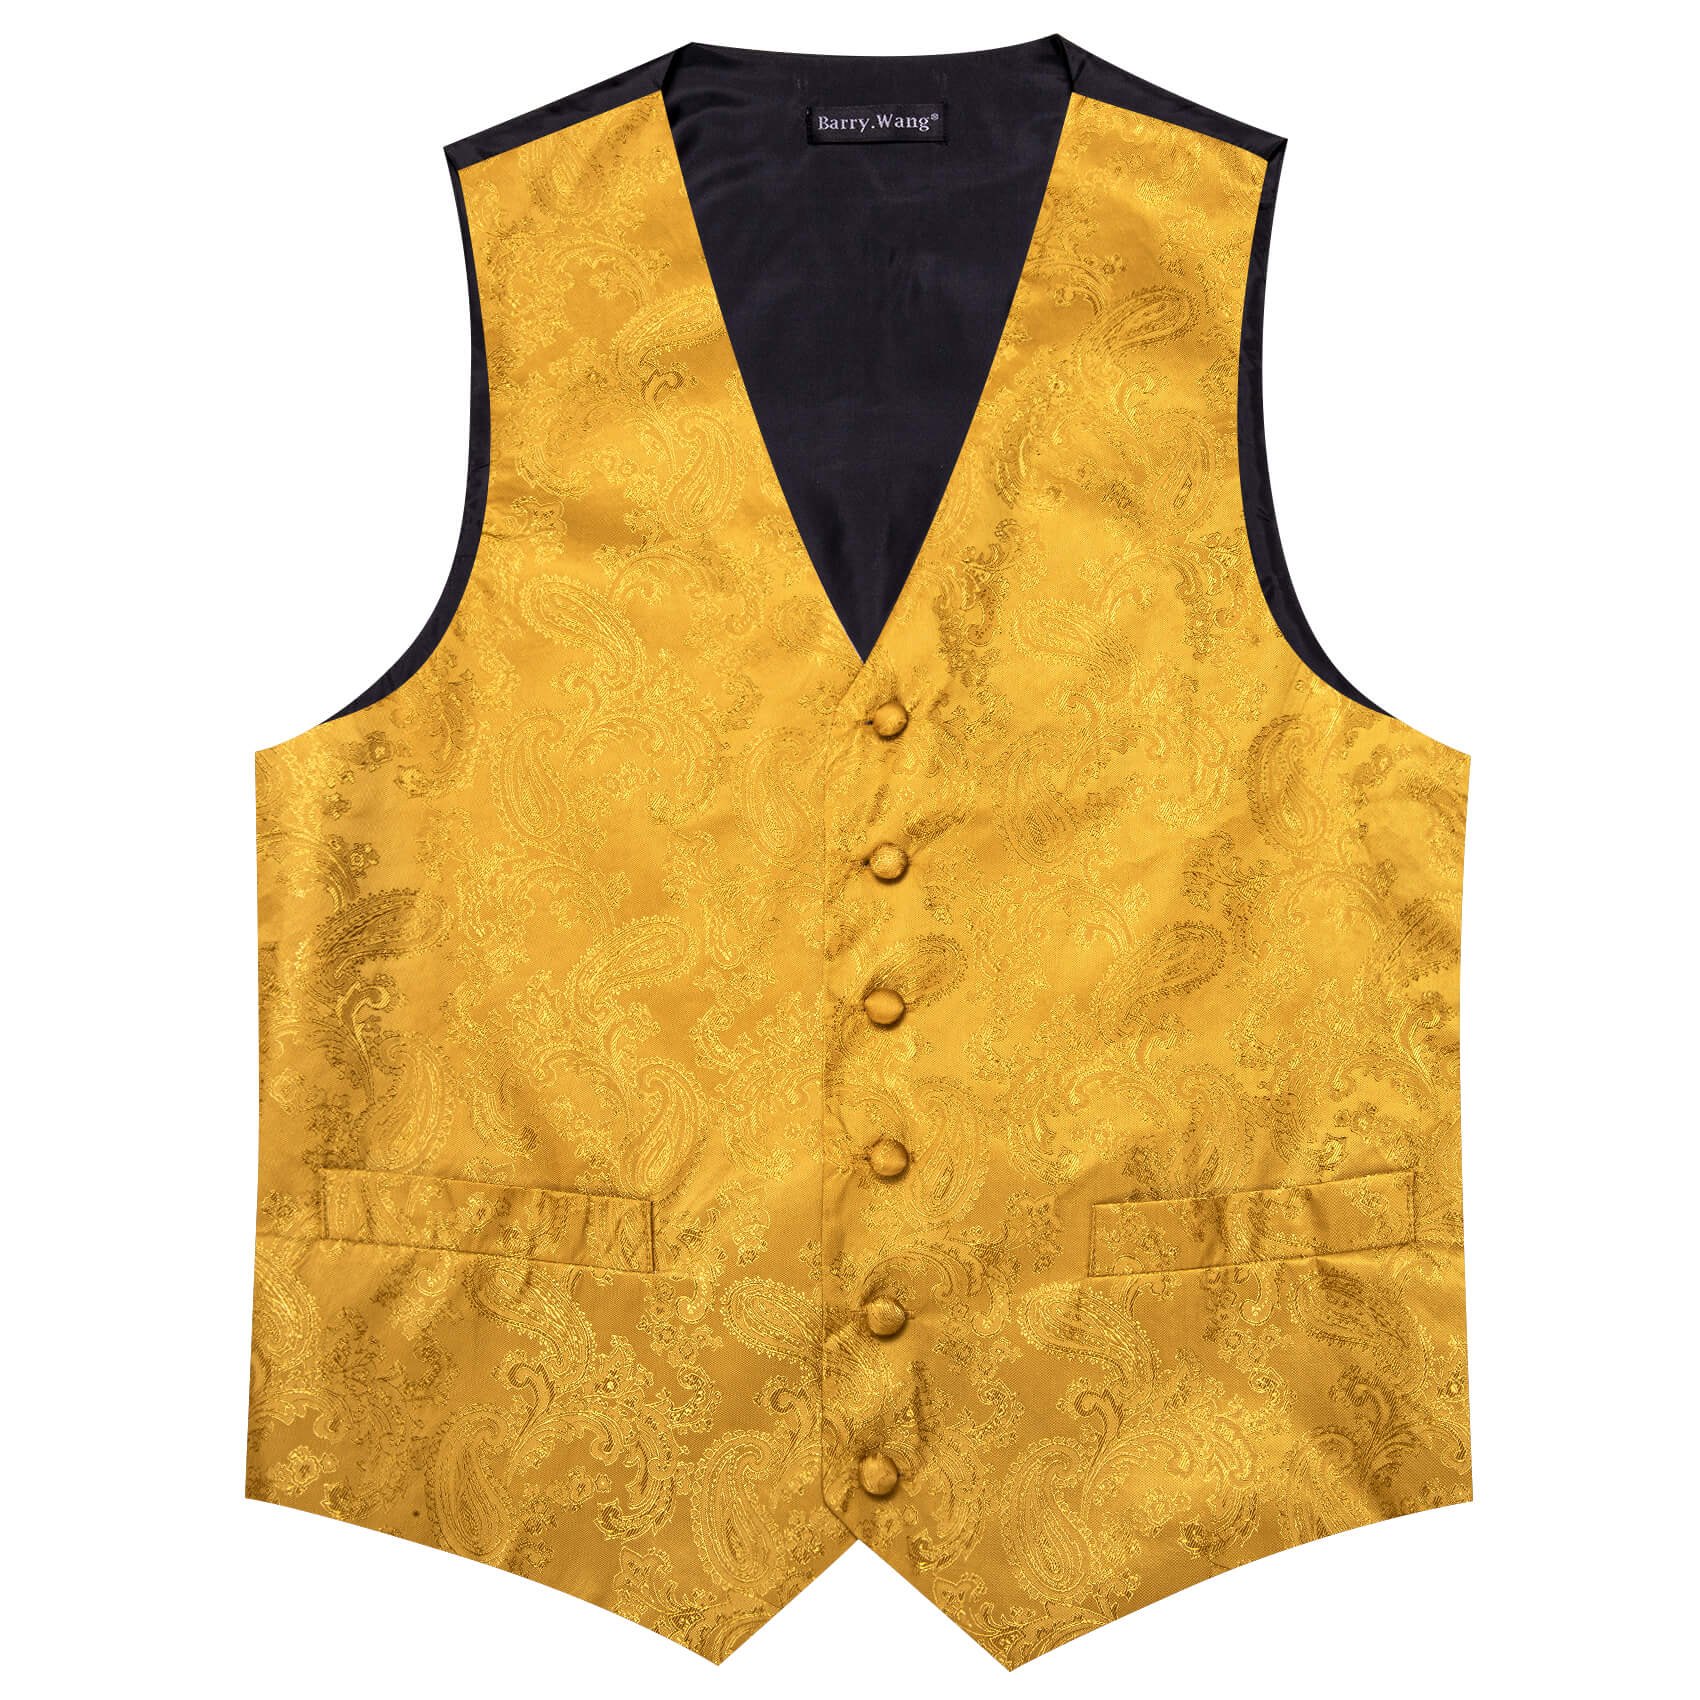 Barry Wang 5pcs Mens Waistcoat Set Sand Yellow Paisley Vest